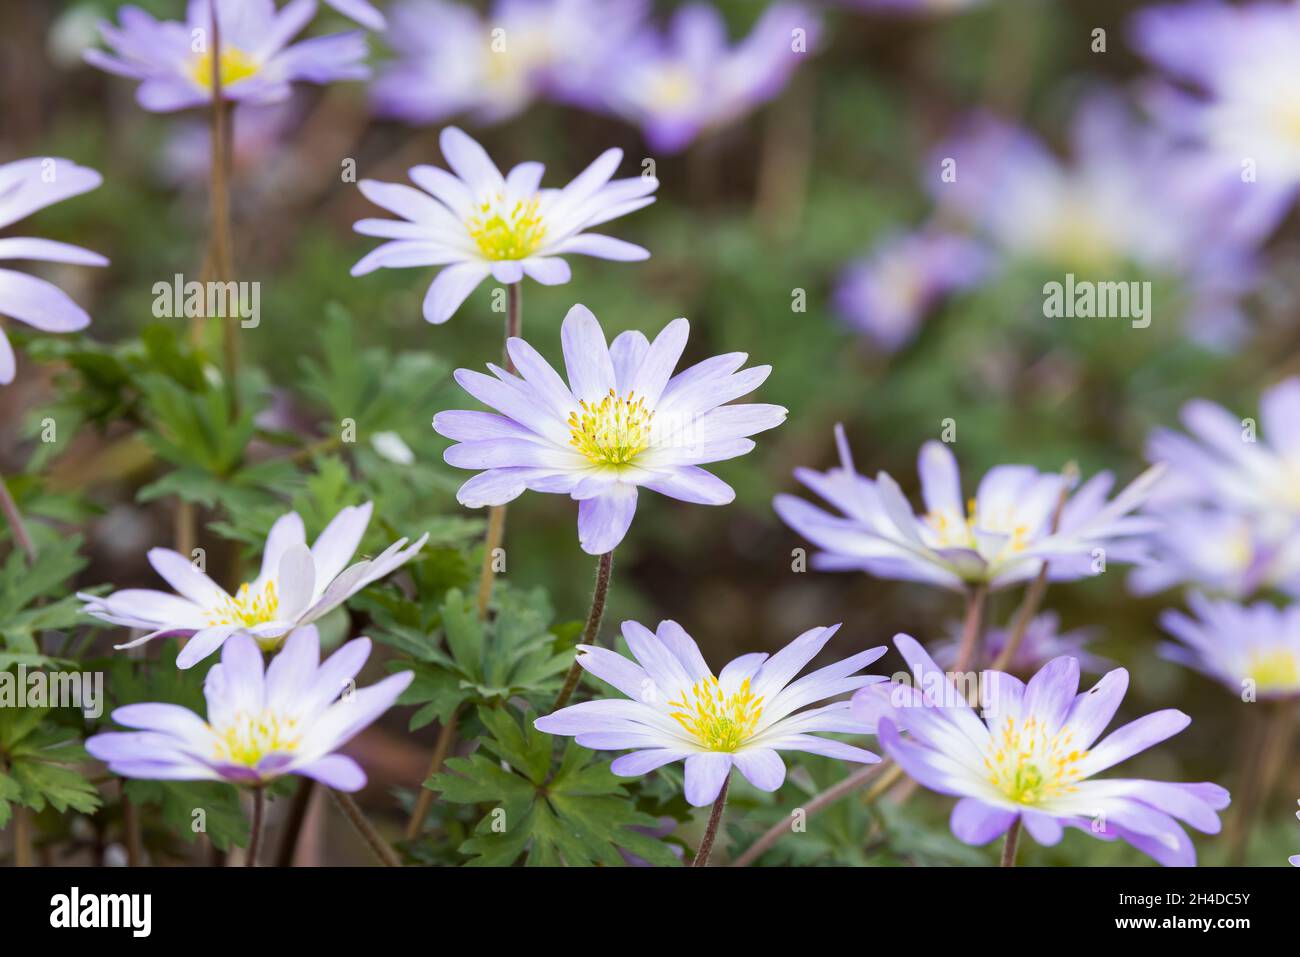 Anemone blanda flowers, perennial plants flowering in spring in a UK garden border Stock Photo